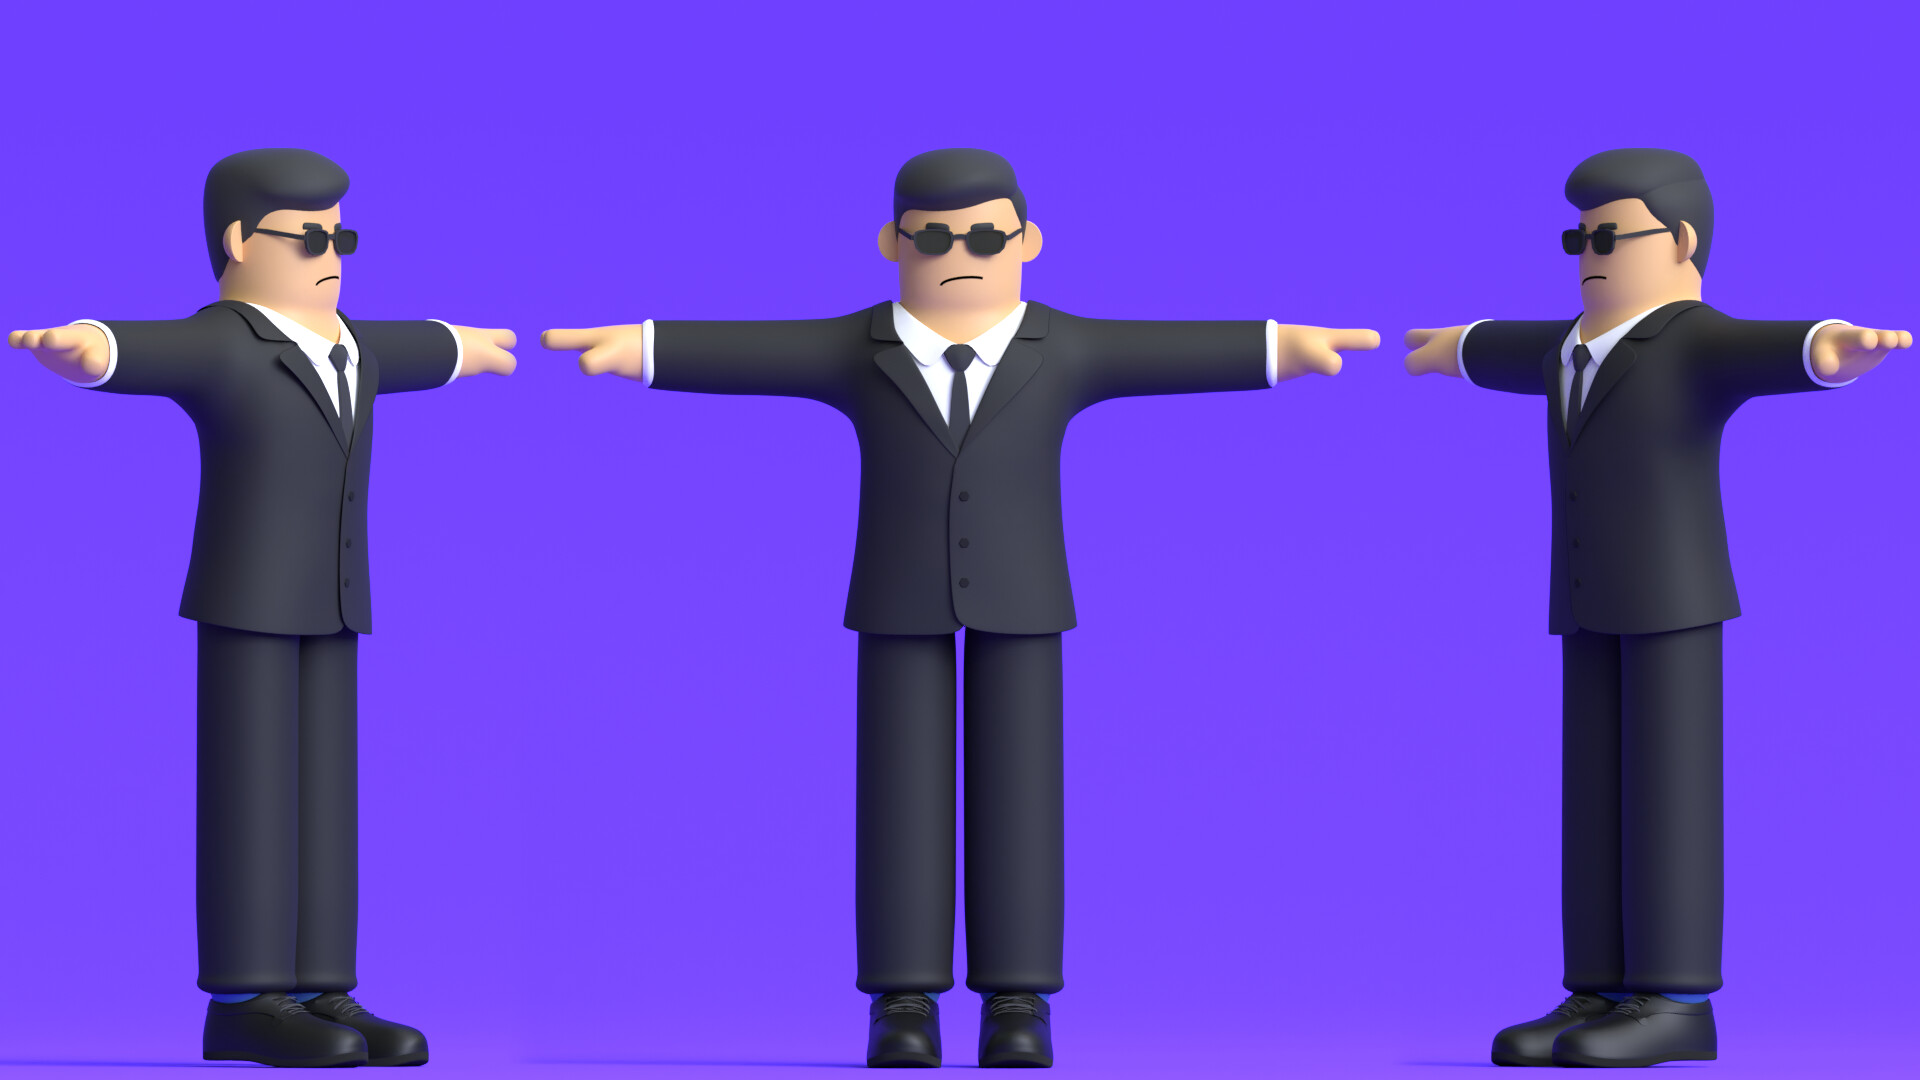 ArtStation - Minimal Bodyguard 3D Cartoon Character